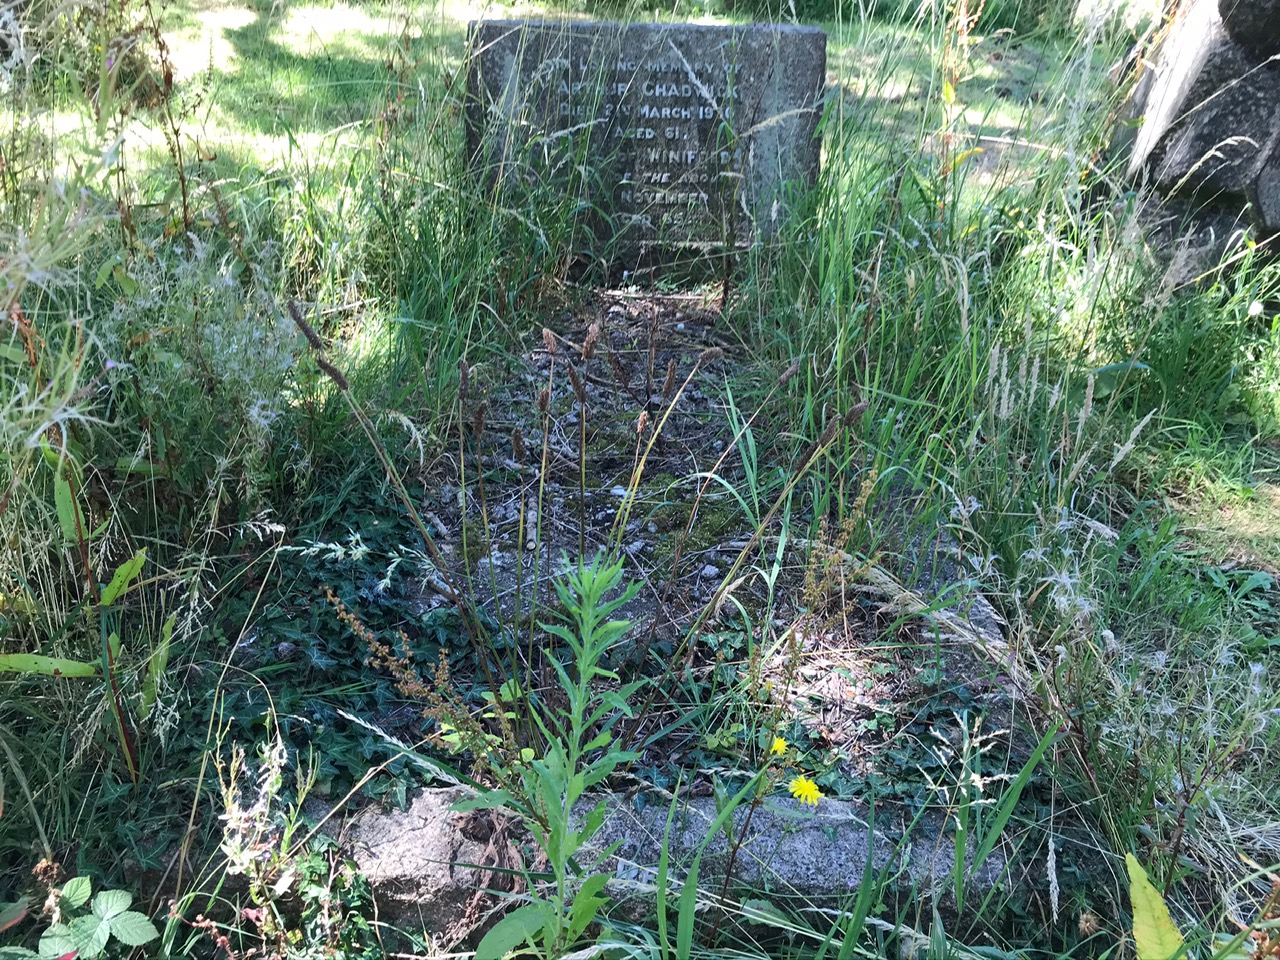 Arthur Chadwick Grave Before.jpeg